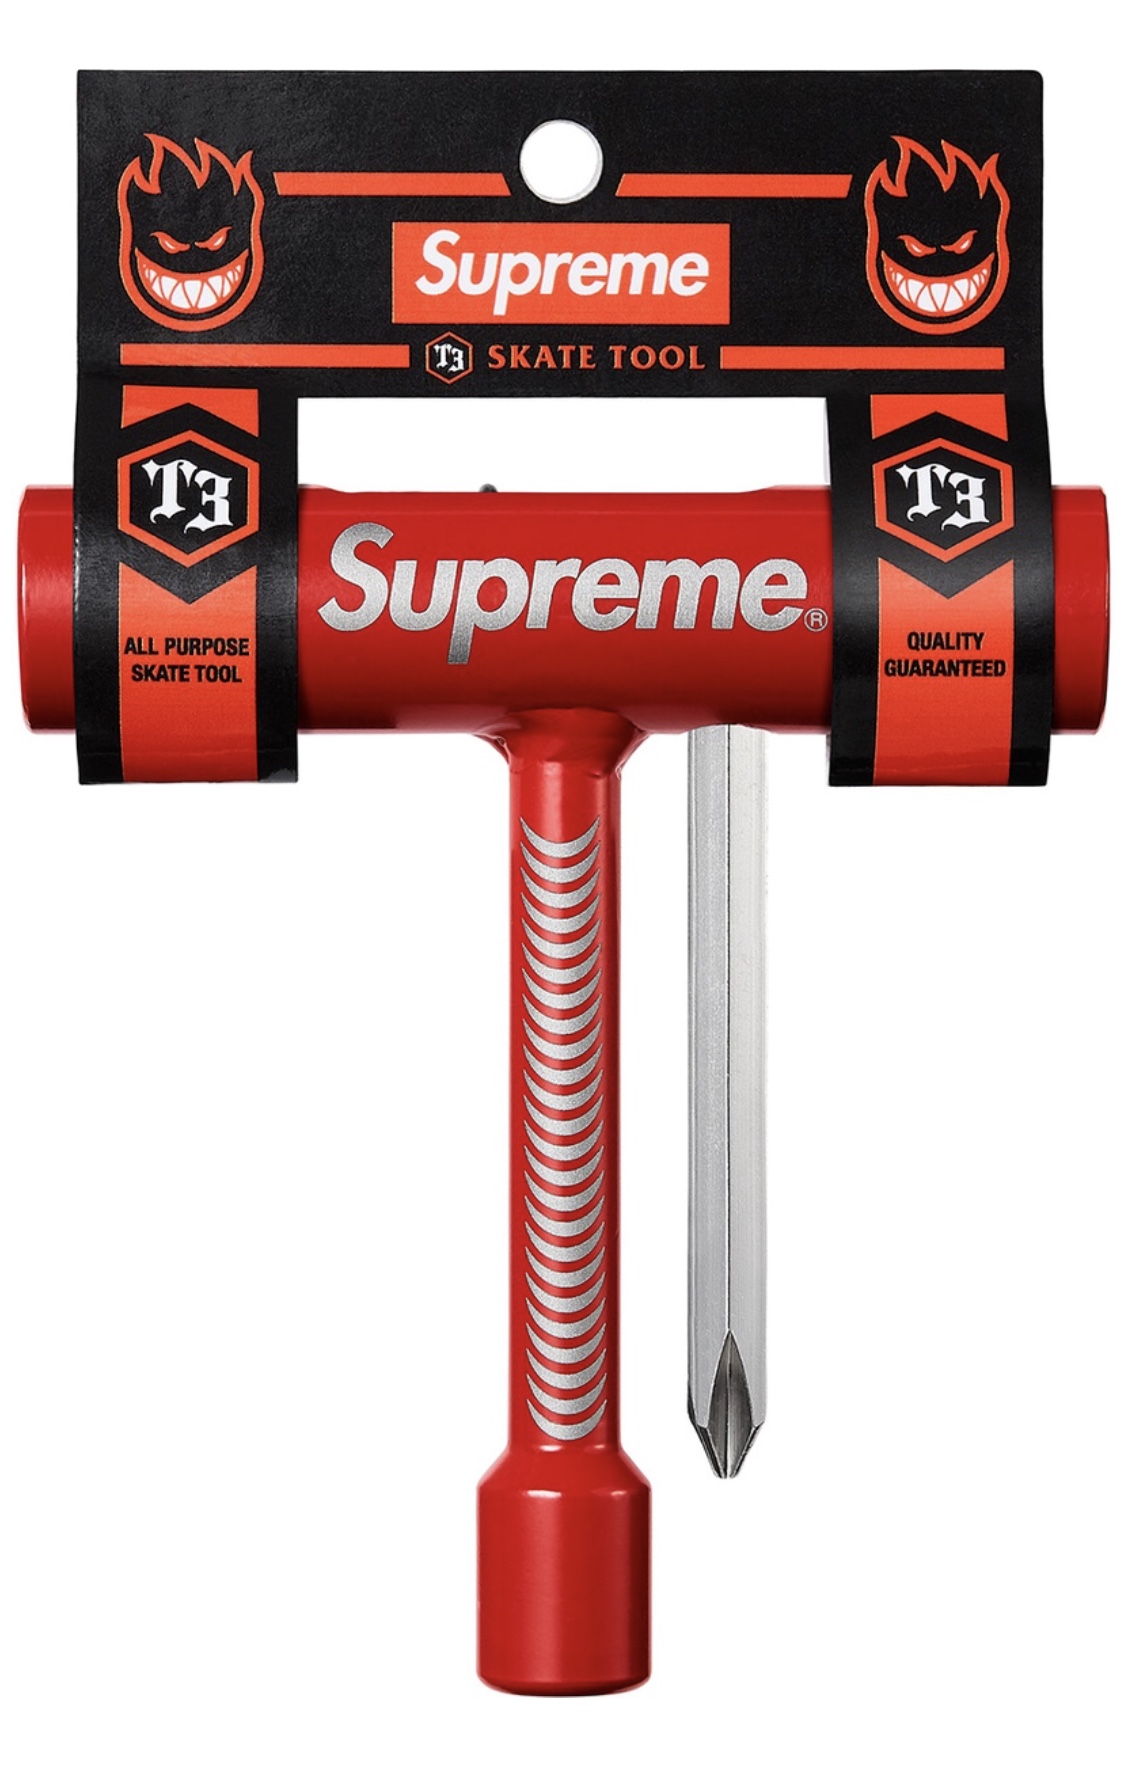 Supreme/Spitfire Skate Tool